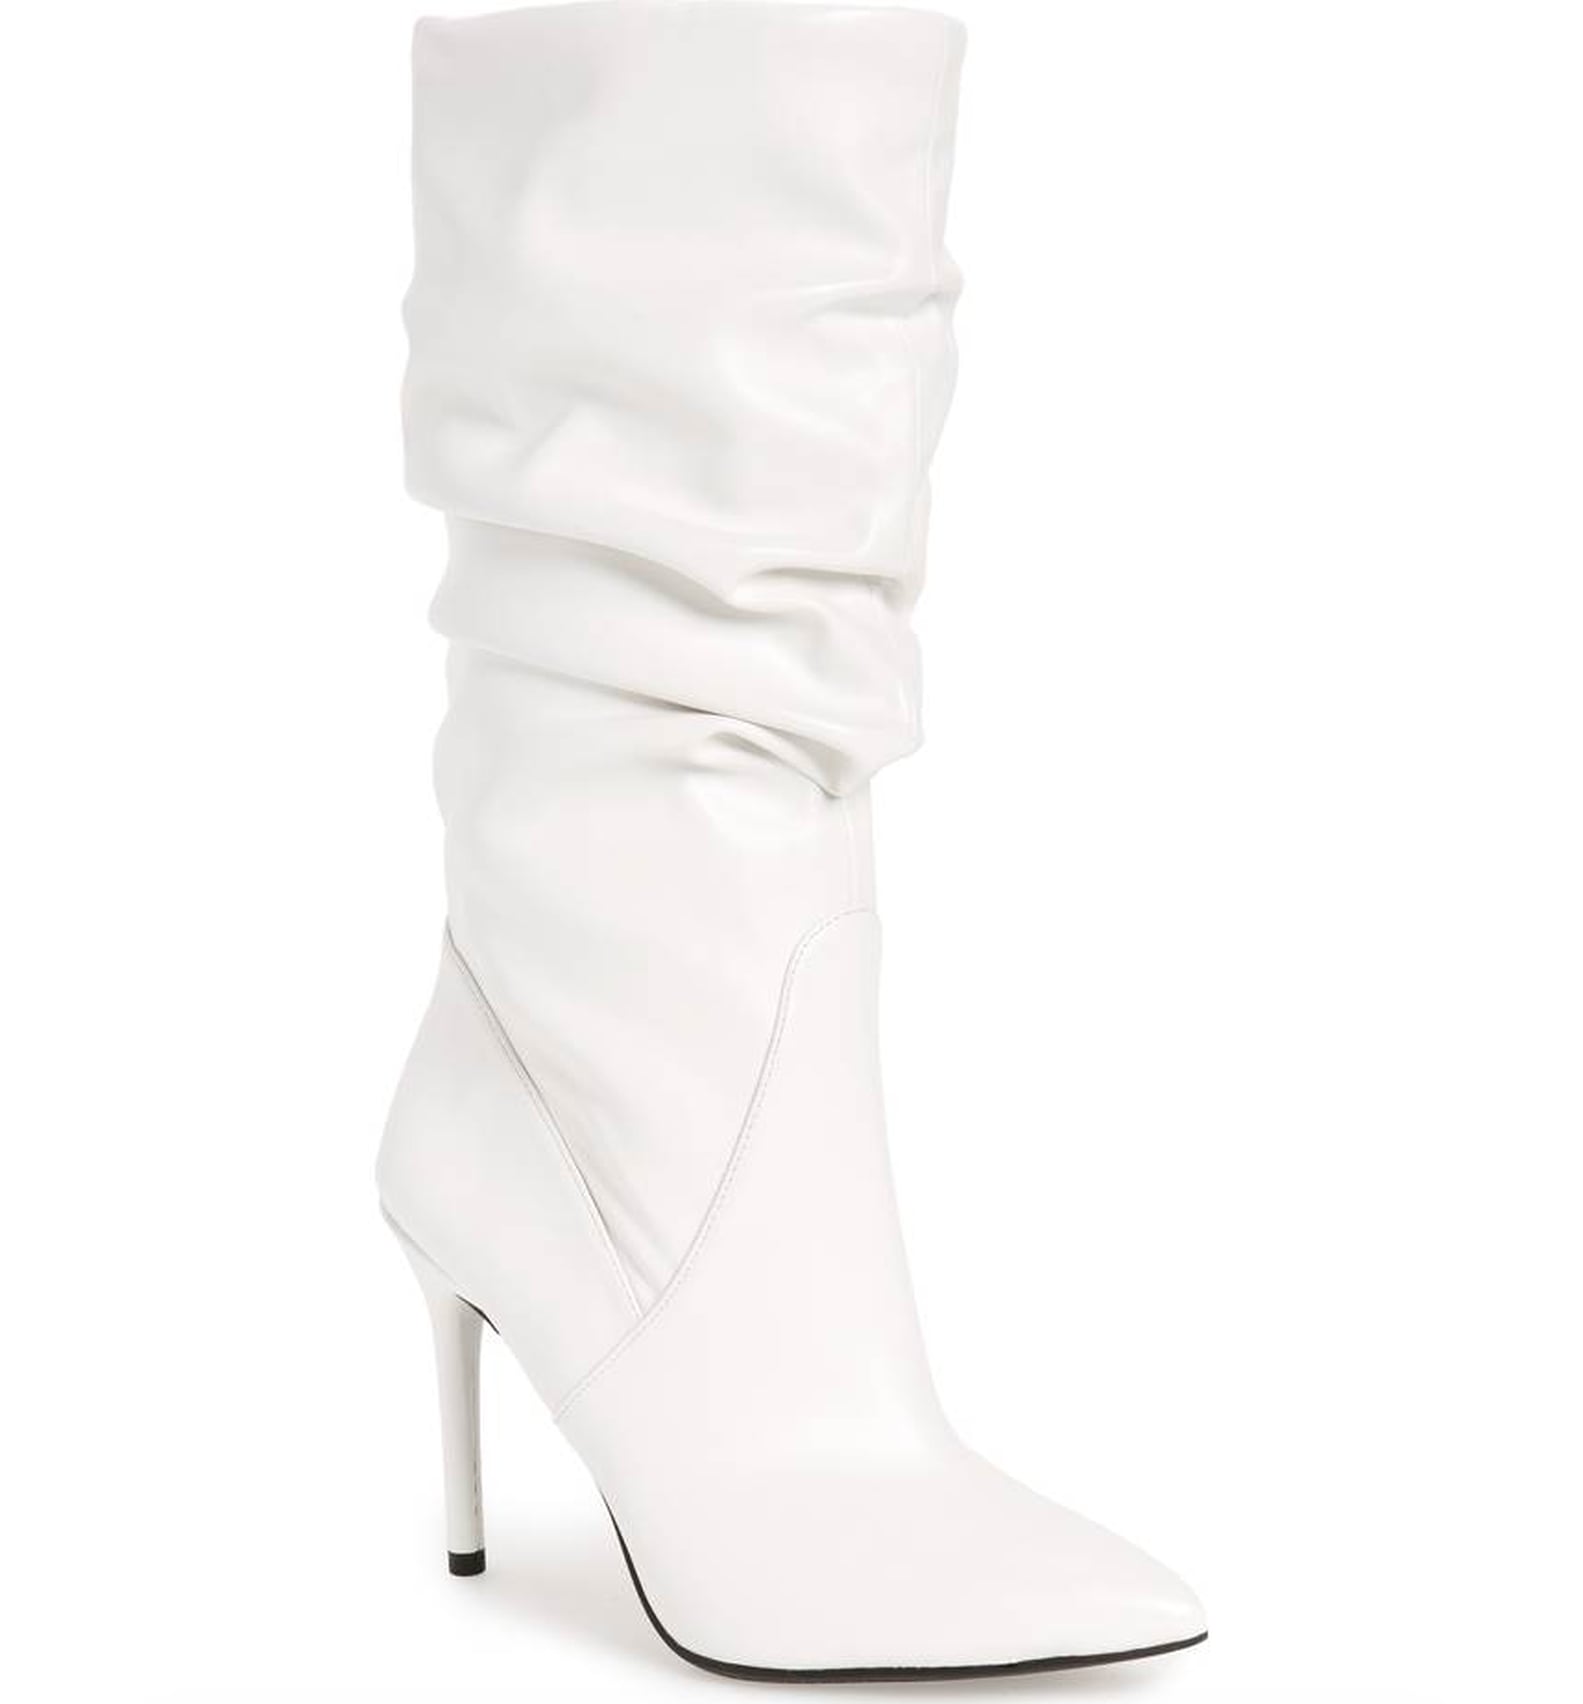 Rihanna's White Off White x Jimmy Choo Boots | POPSUGAR Fashion